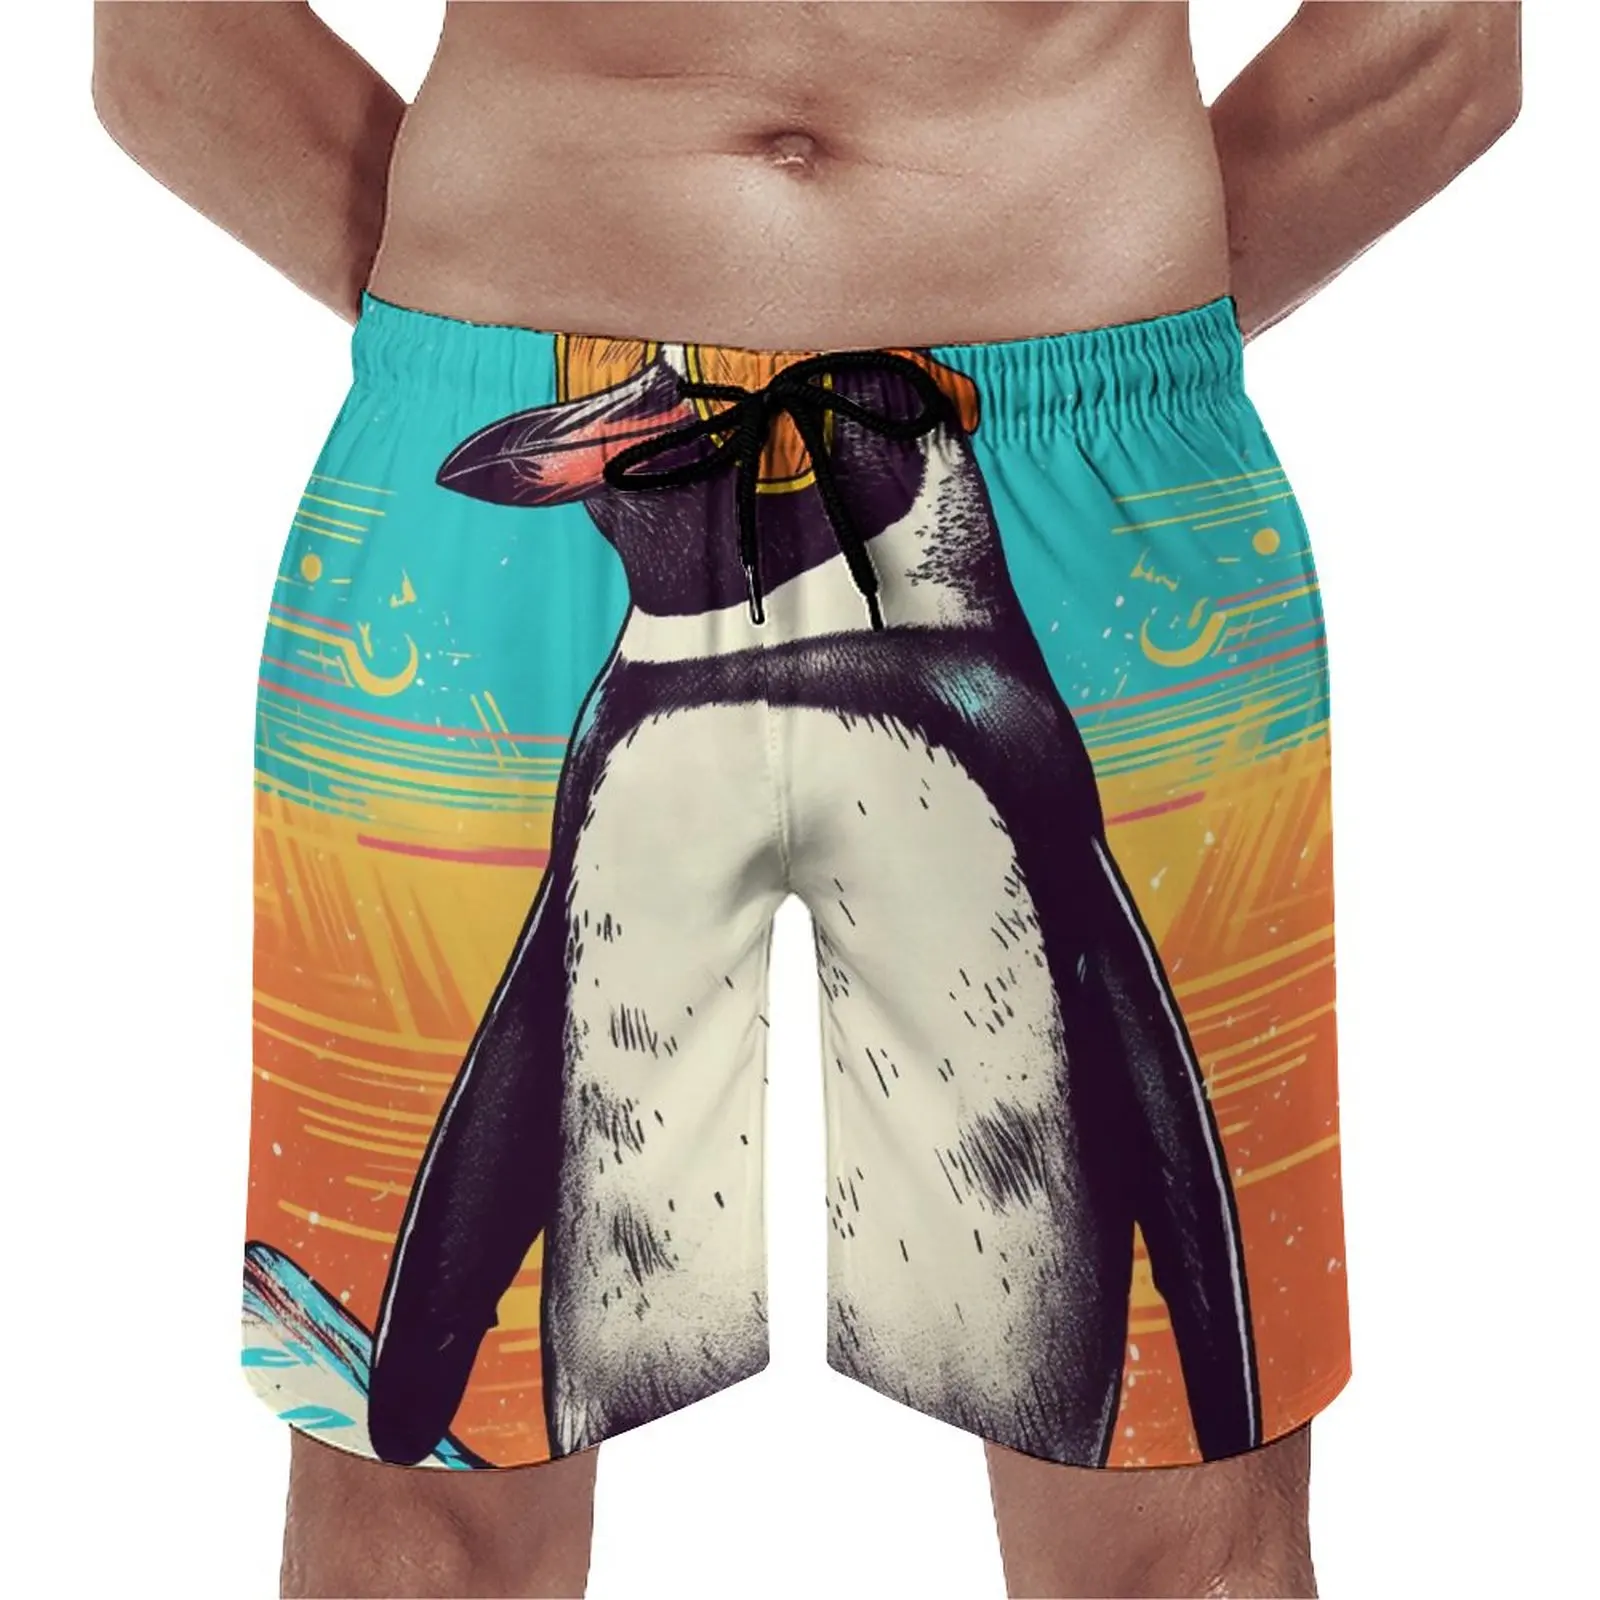 

Penguin Board Shorts Summer Sunny Beach Sunglasses Casual Beach Short Pants Male Sports Fitness Comfortable Graphic Beach Trunks